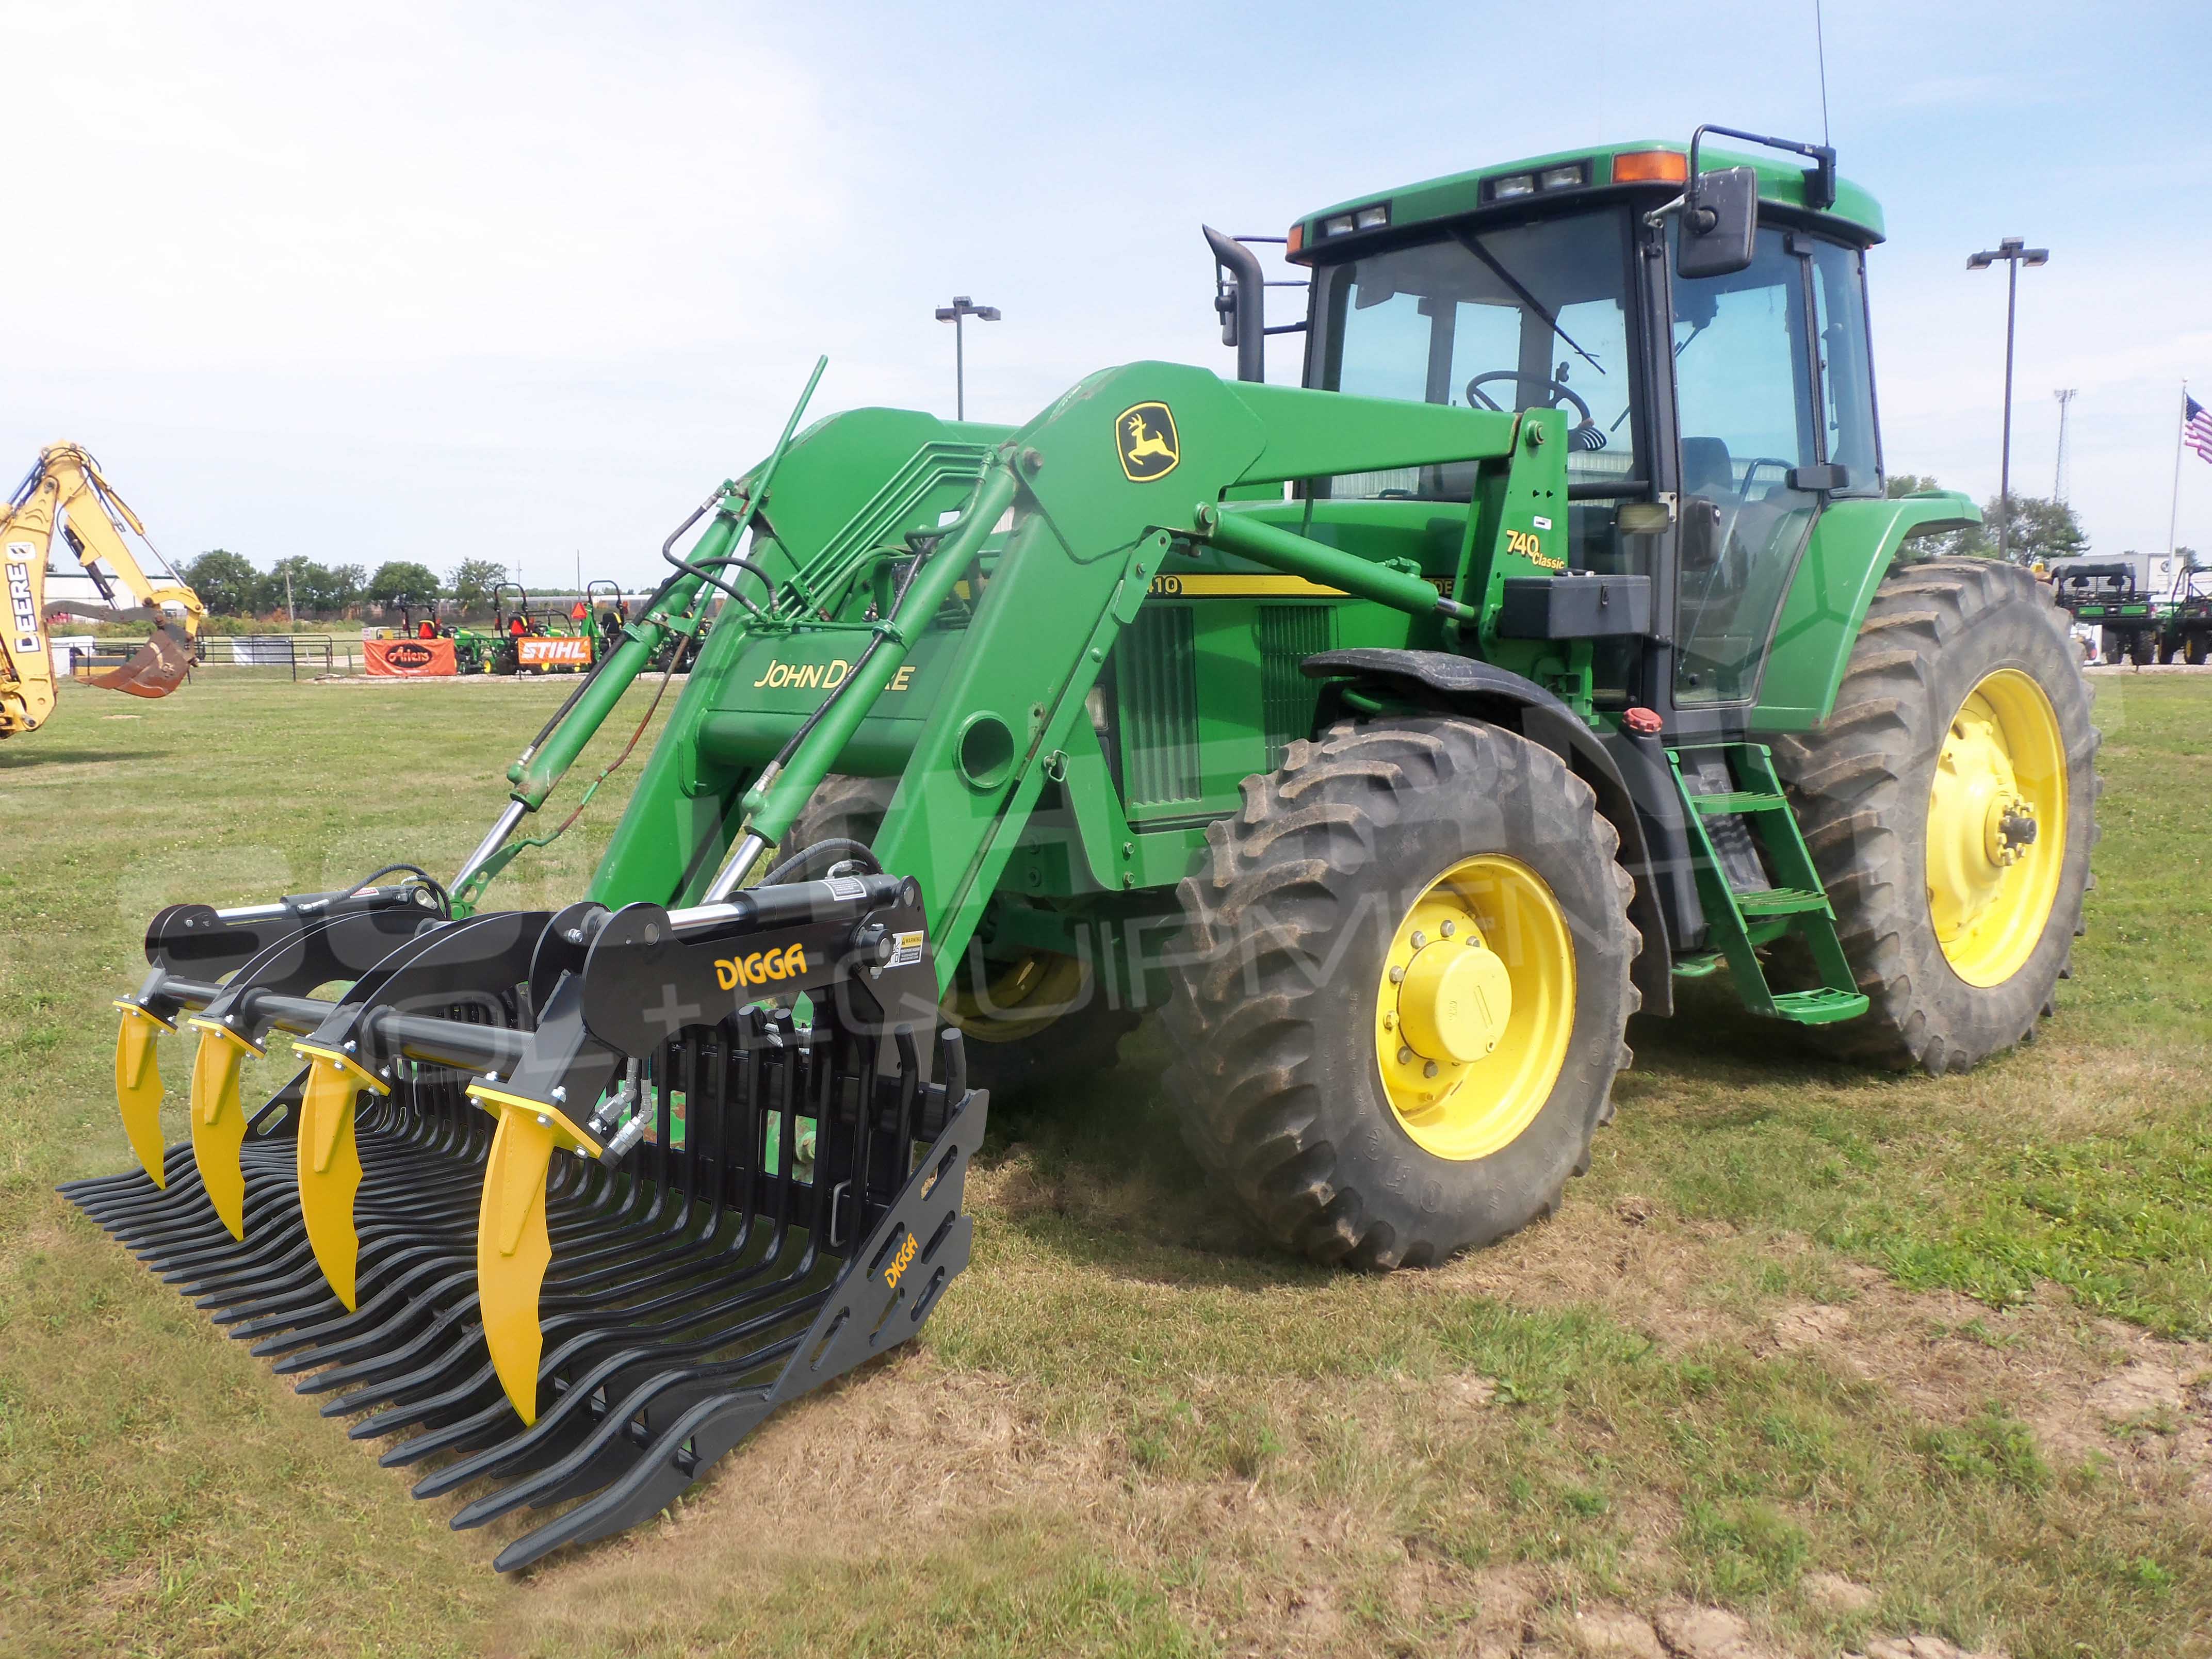 Digga 2000mm Tractor Grapple Bucket Southern Tool Equipment Co Earthmoving Machinery 2928